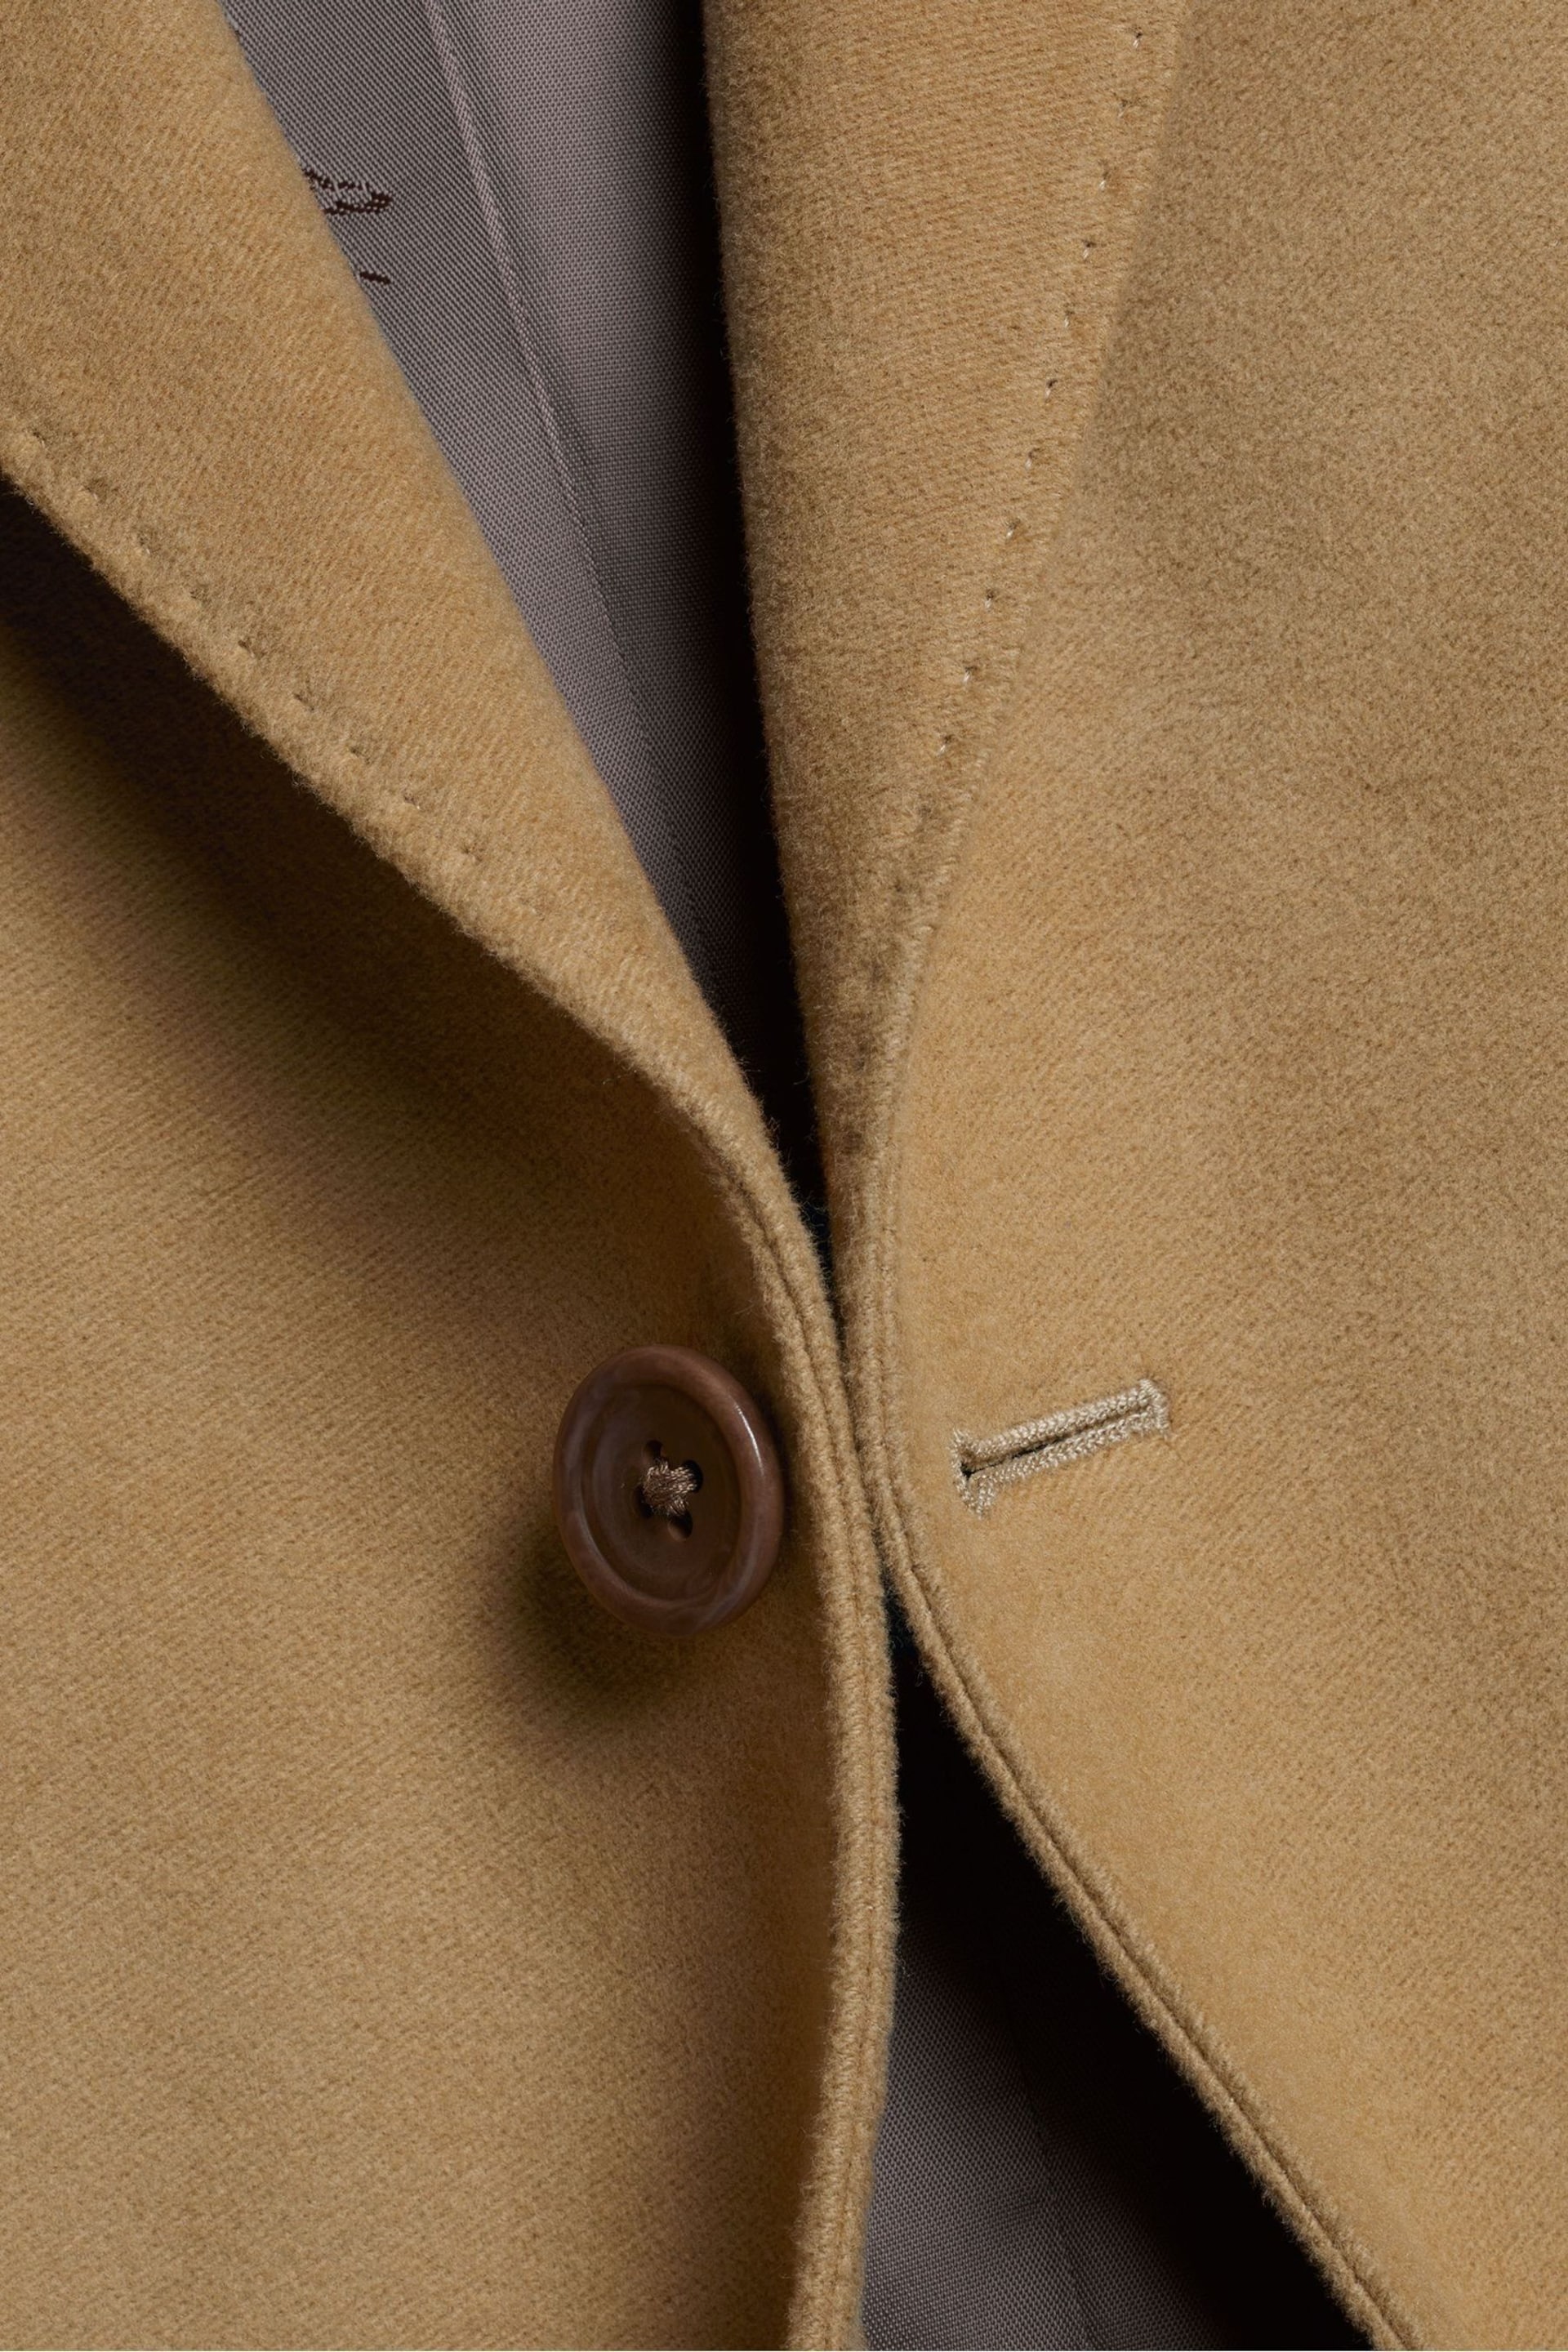 Charles Tyrwhitt Natural Tan Italian Moleskin Classic Fit Jacket - Image 6 of 6